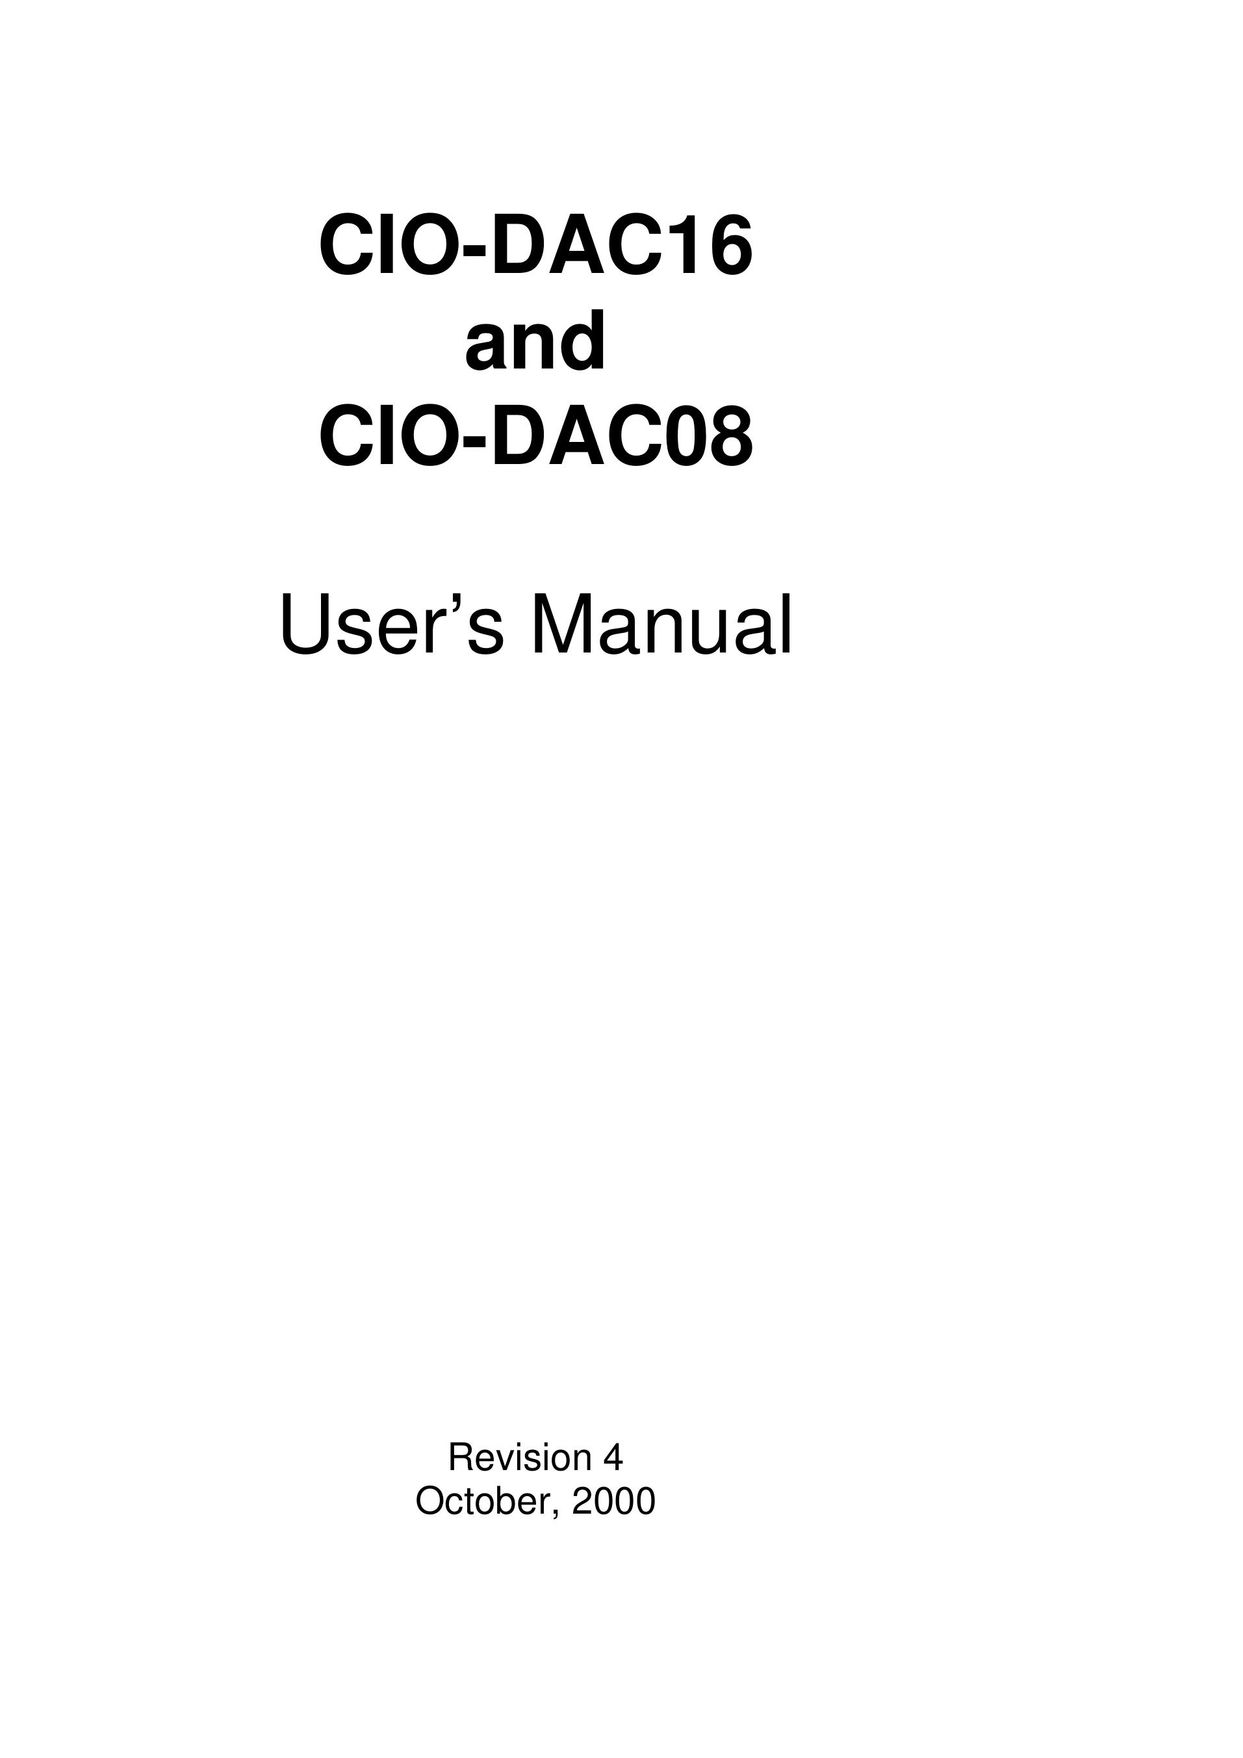 Omega Engineering CIO-DAC16 DVD VCR Combo User Manual